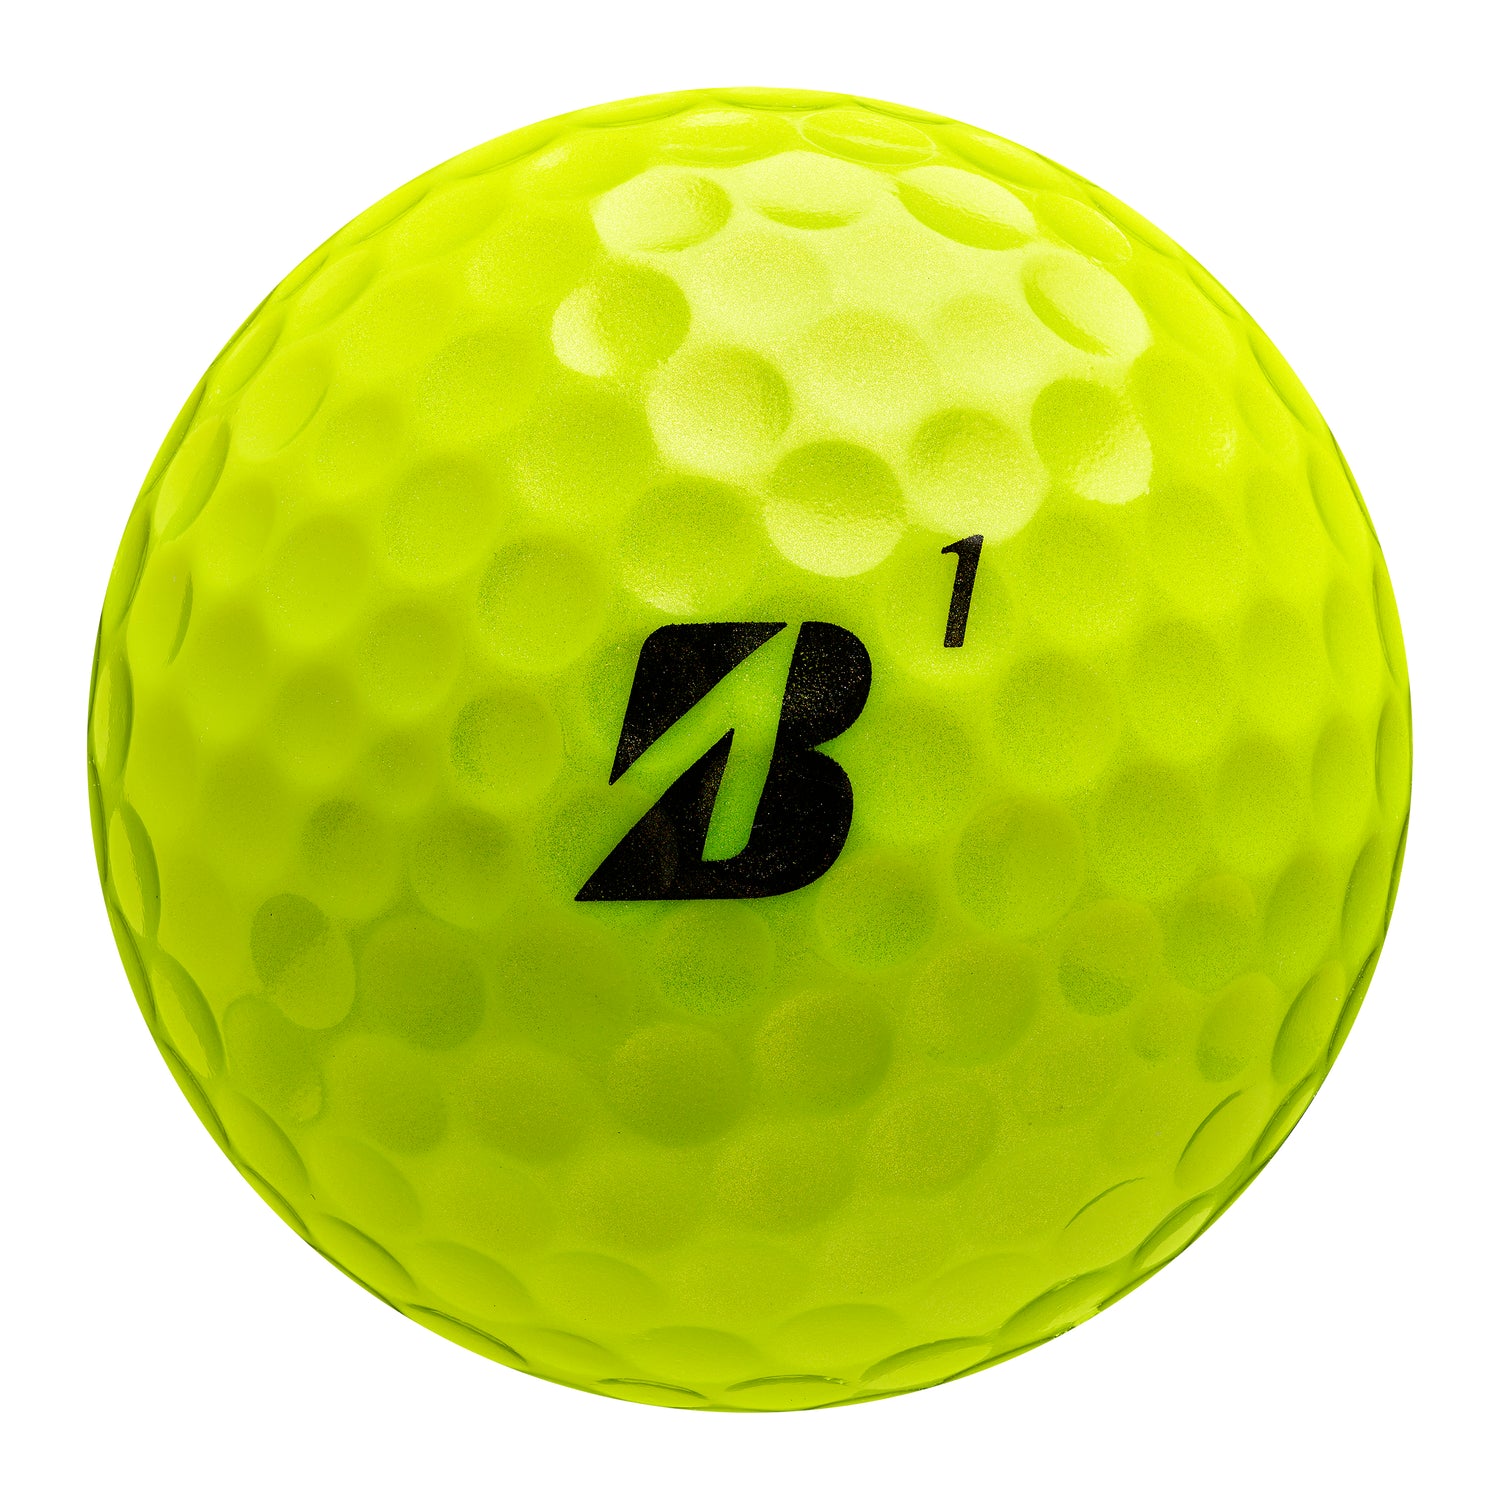 Bridgestone E6 Golf Balls - Yellow   